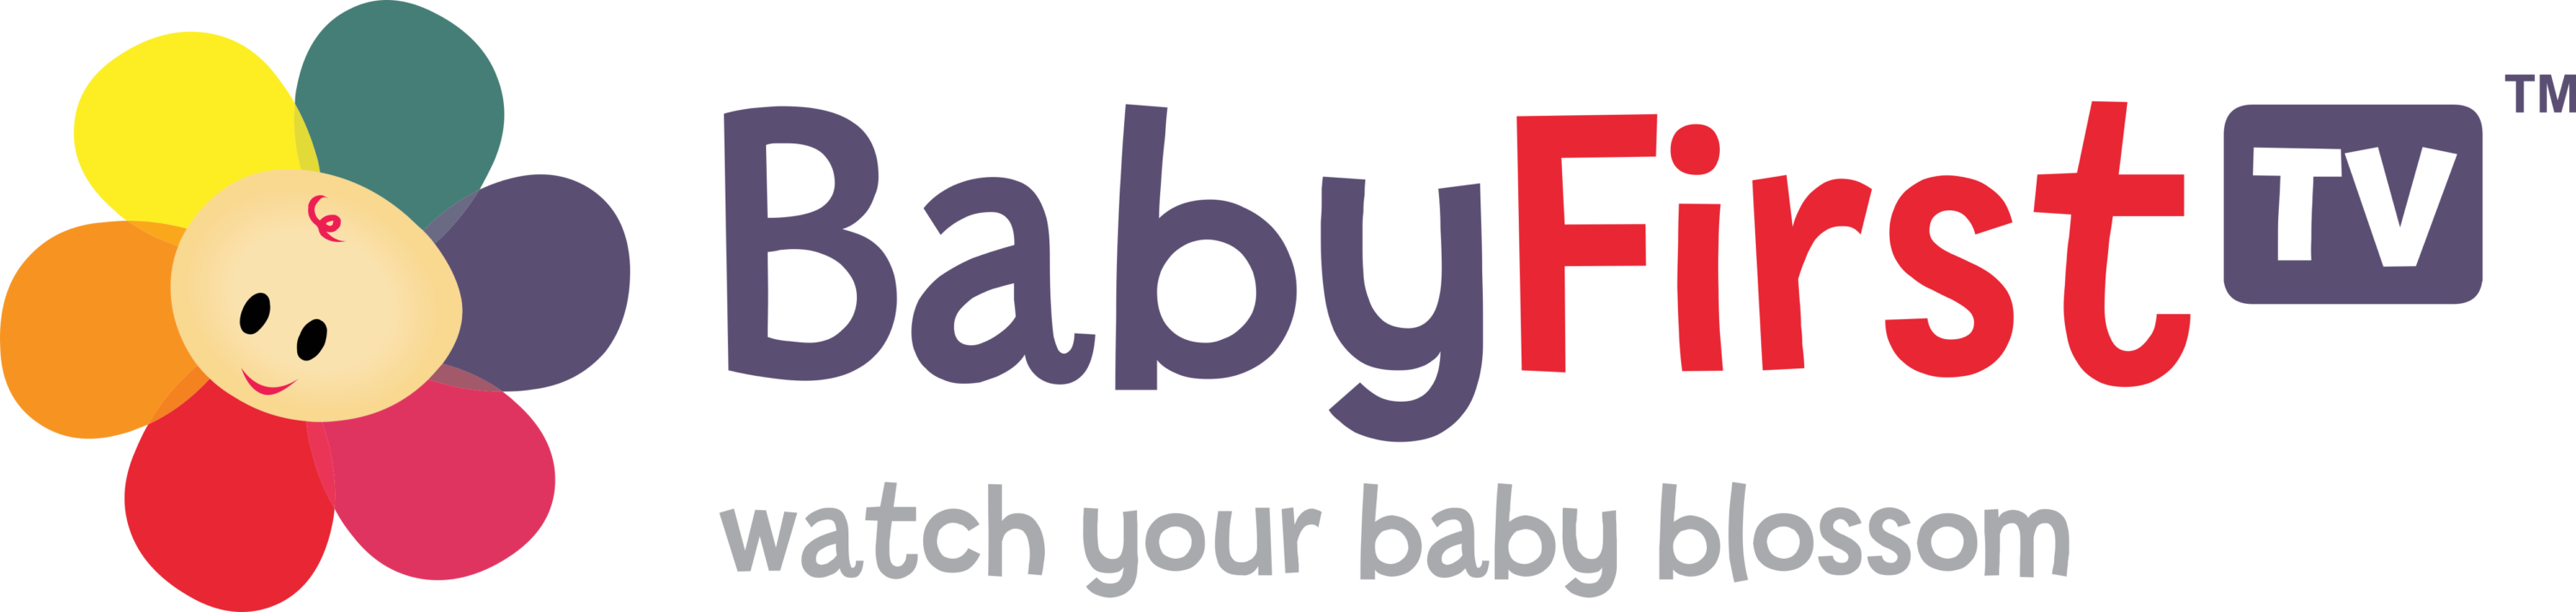 BabyFirstTV Logo 2011